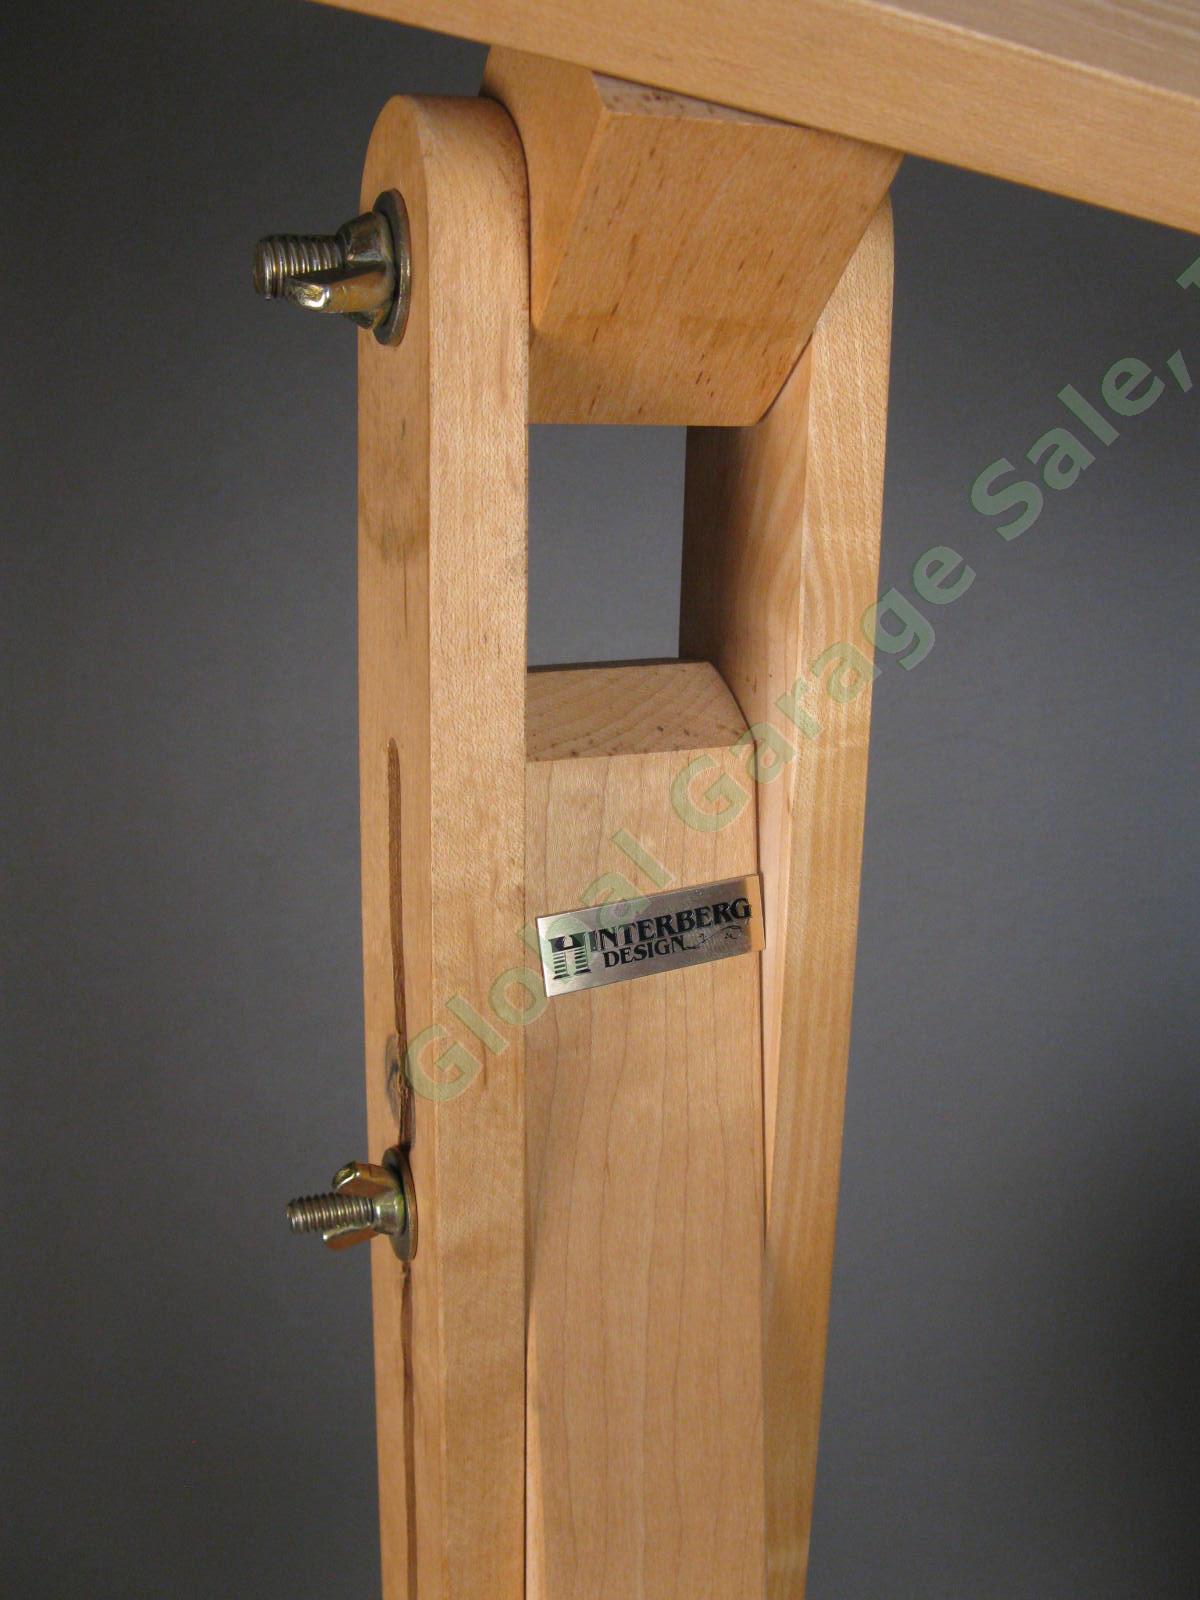 Hinterberg Design 22" Inch Homestead Adjustable Quilting Quilt Hoop Wood Stand 5